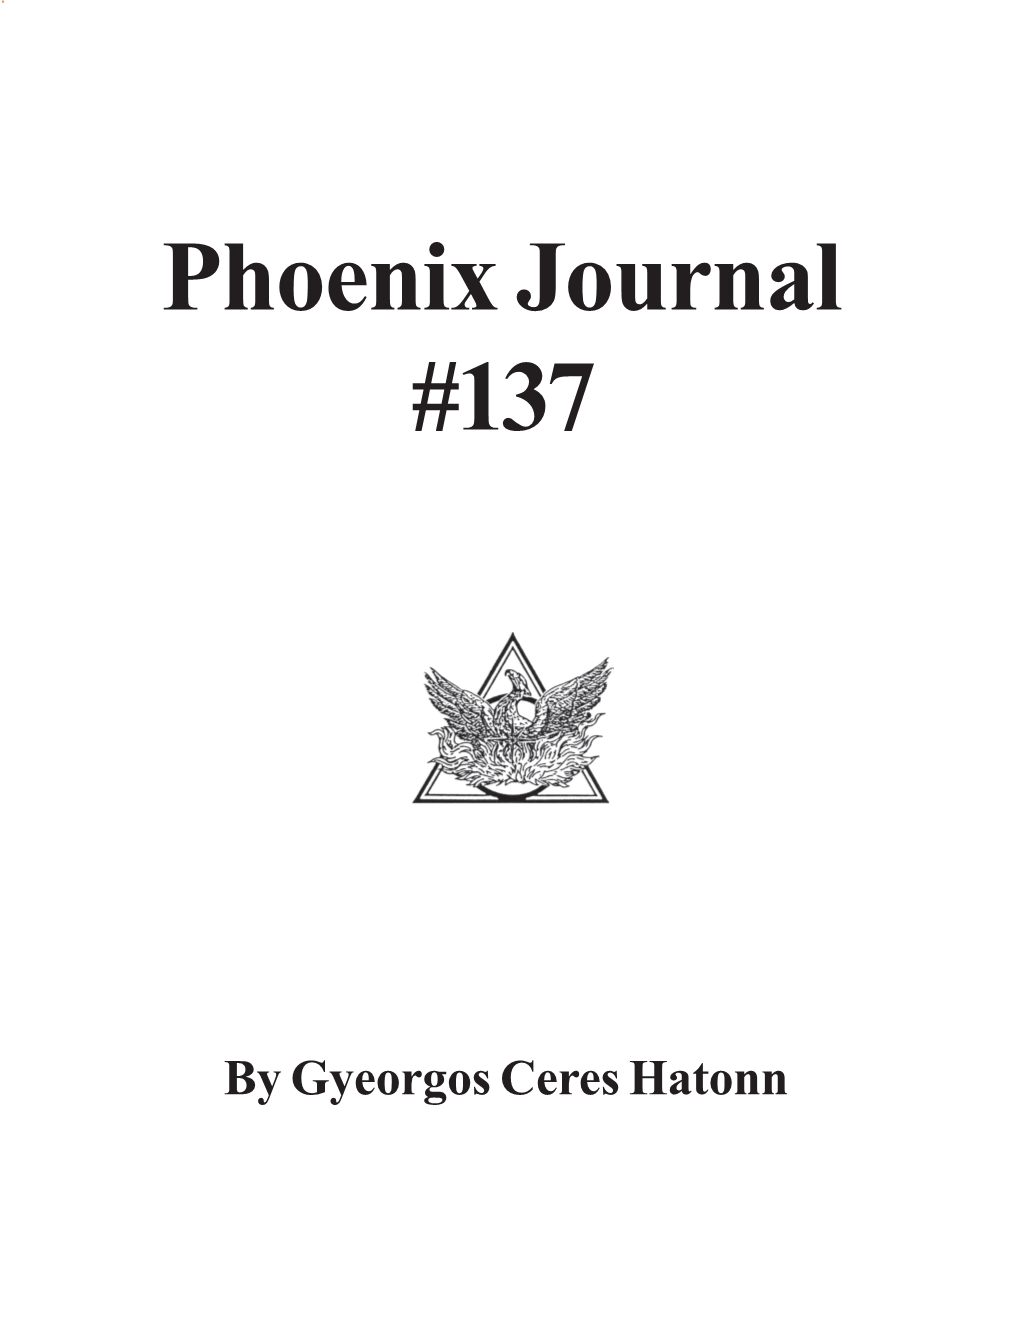 Phoenix Journal #137